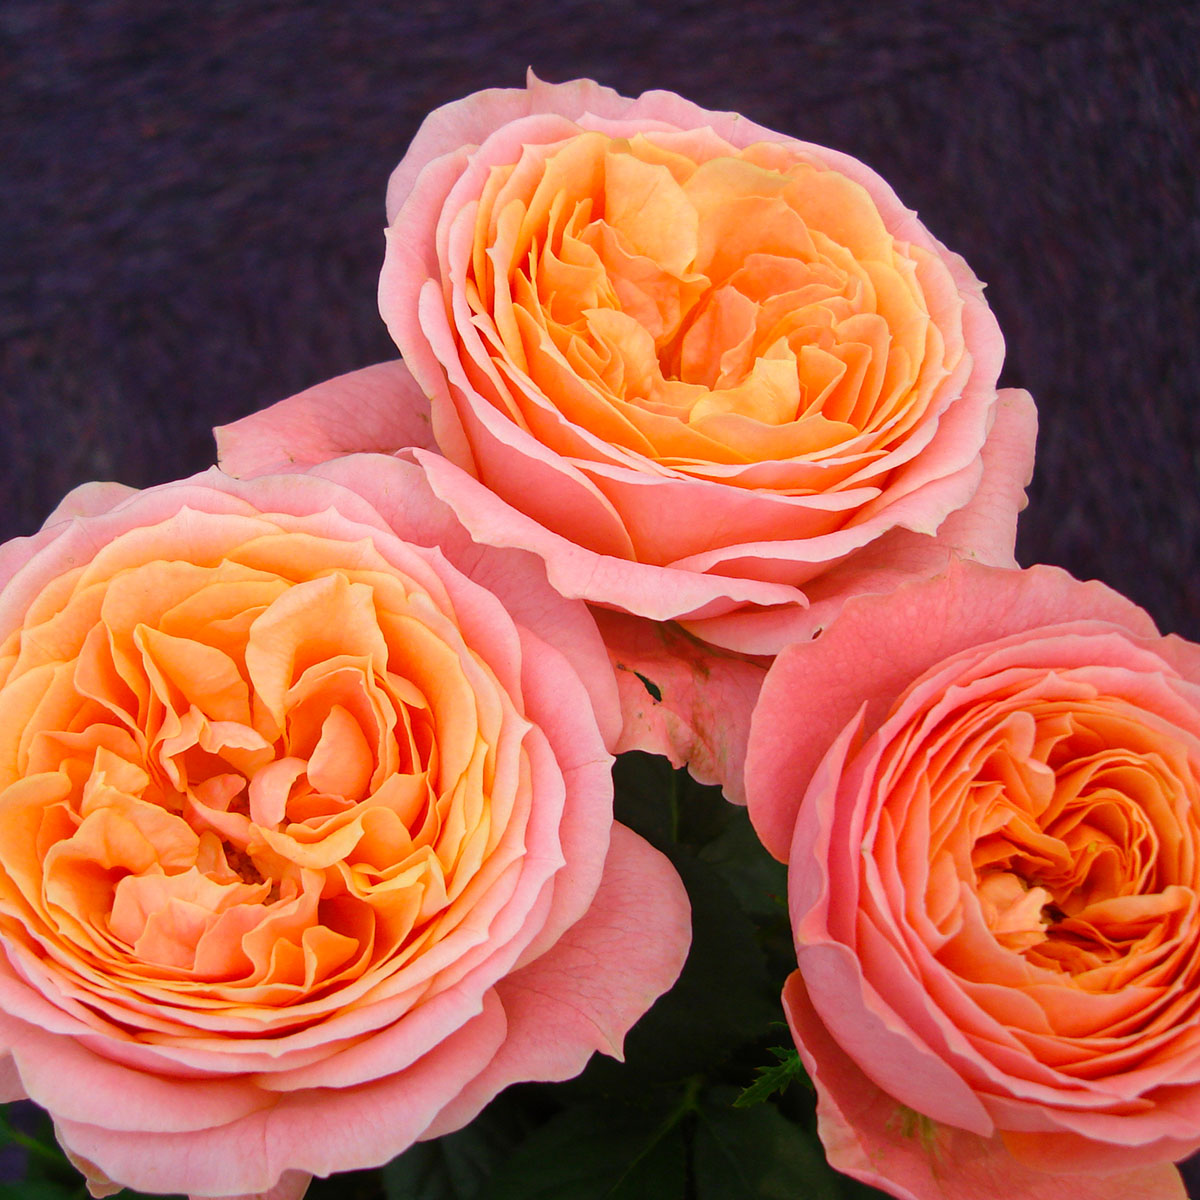 TOTF2020 Viking Roses 45 Rosa Loves Me Just A Little Bit More